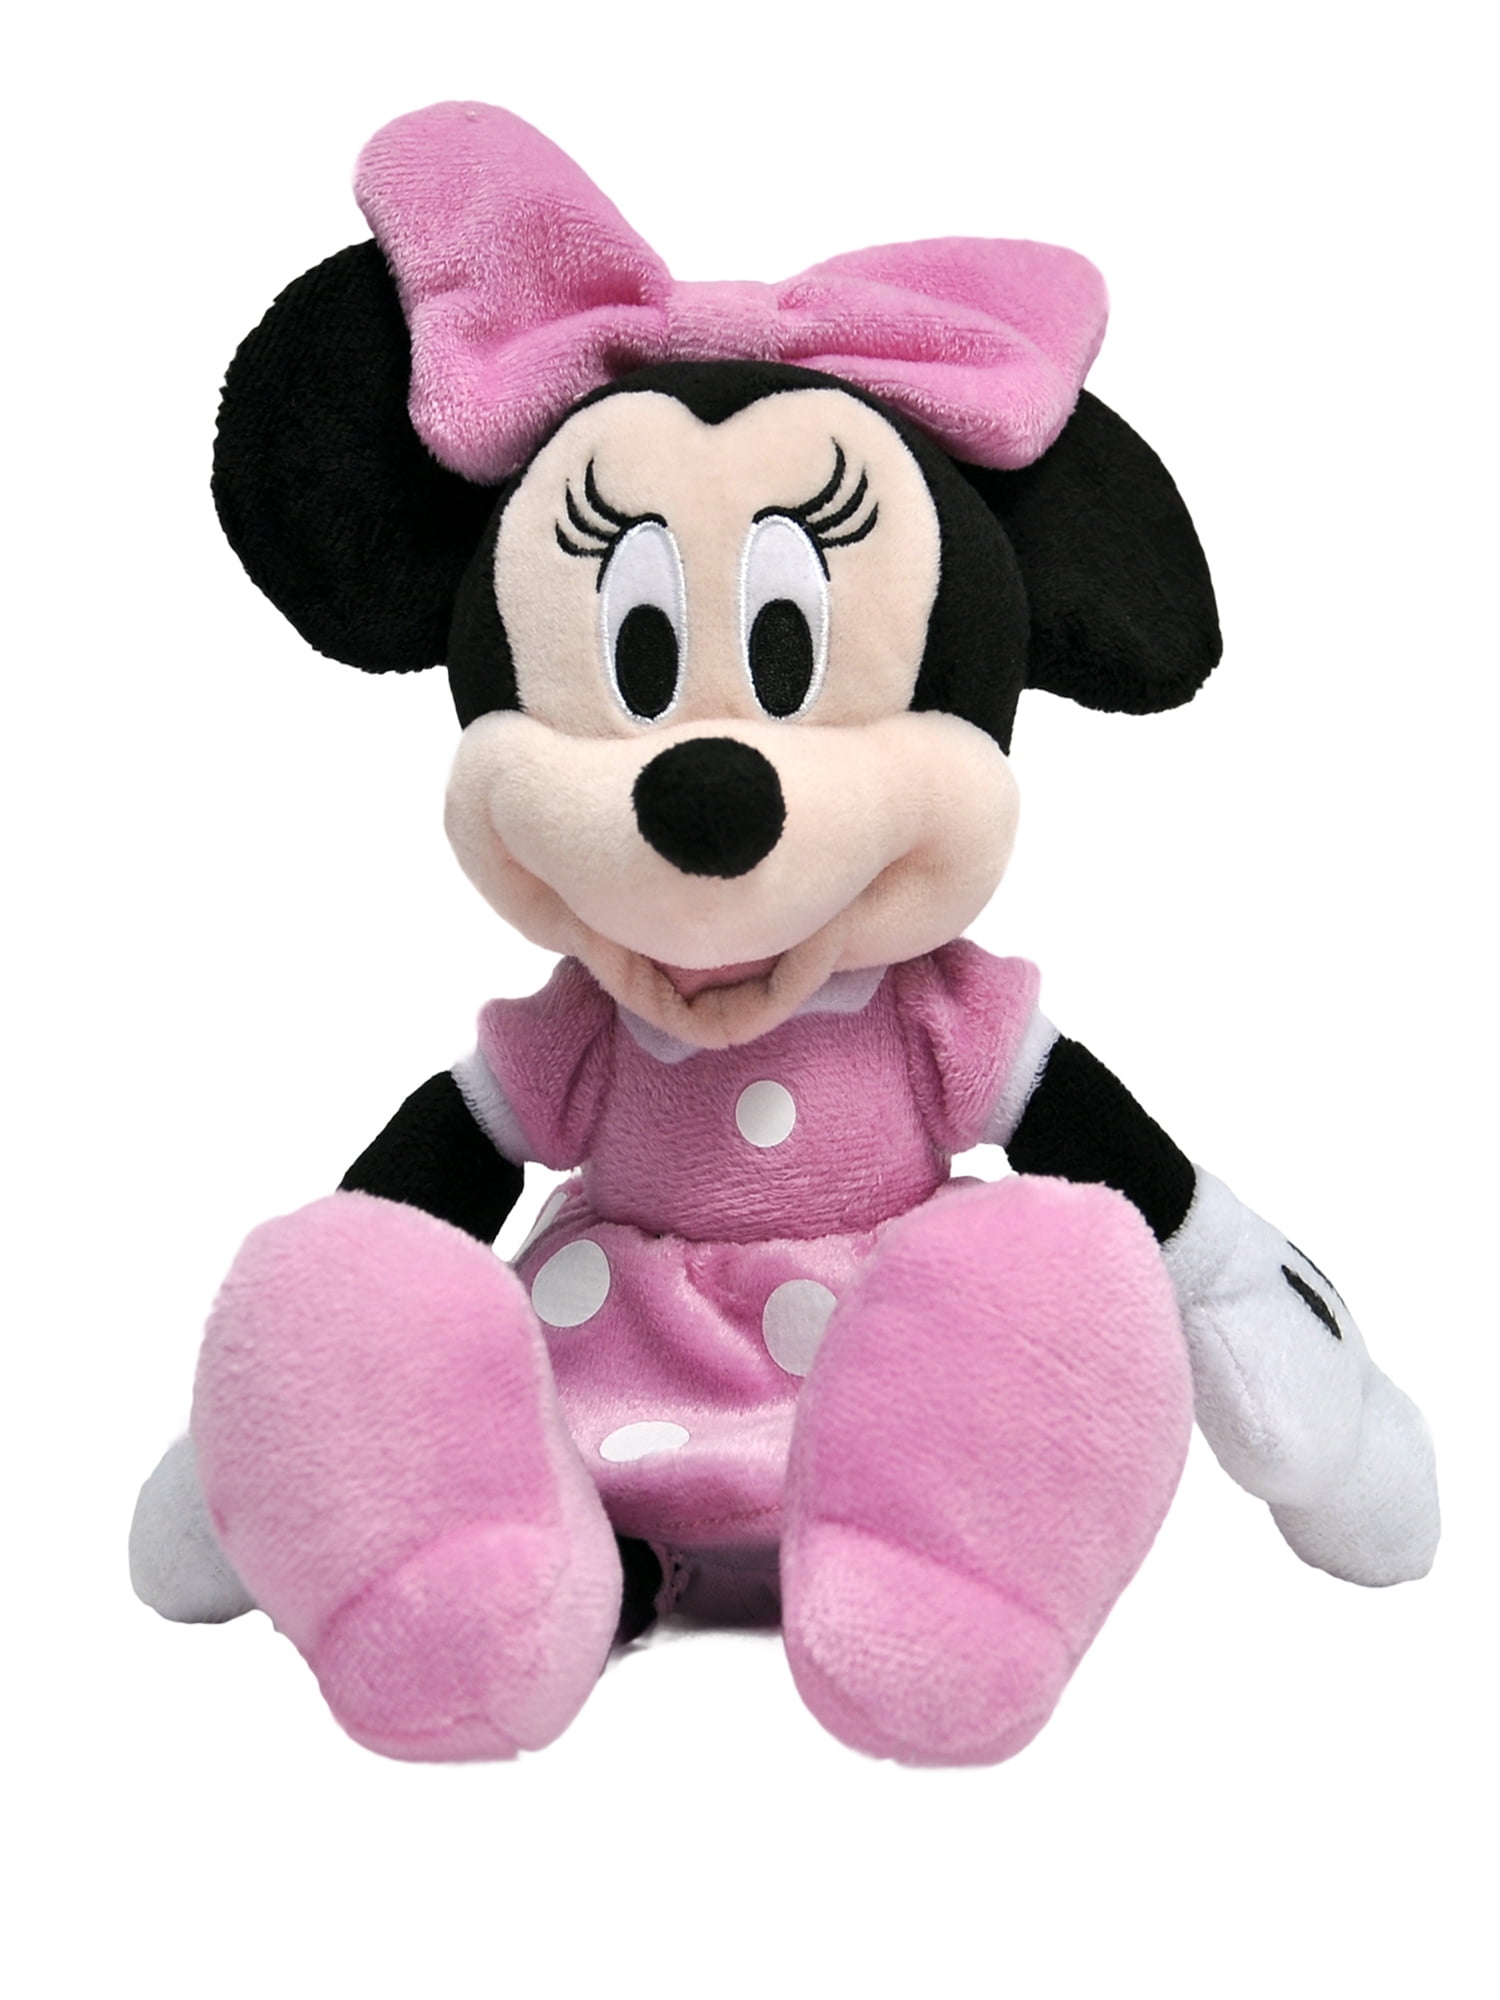 Disney Junior Minnie Mouse Pink Polka Dot Dress Plush Soft Stuffed Beanie 10" 